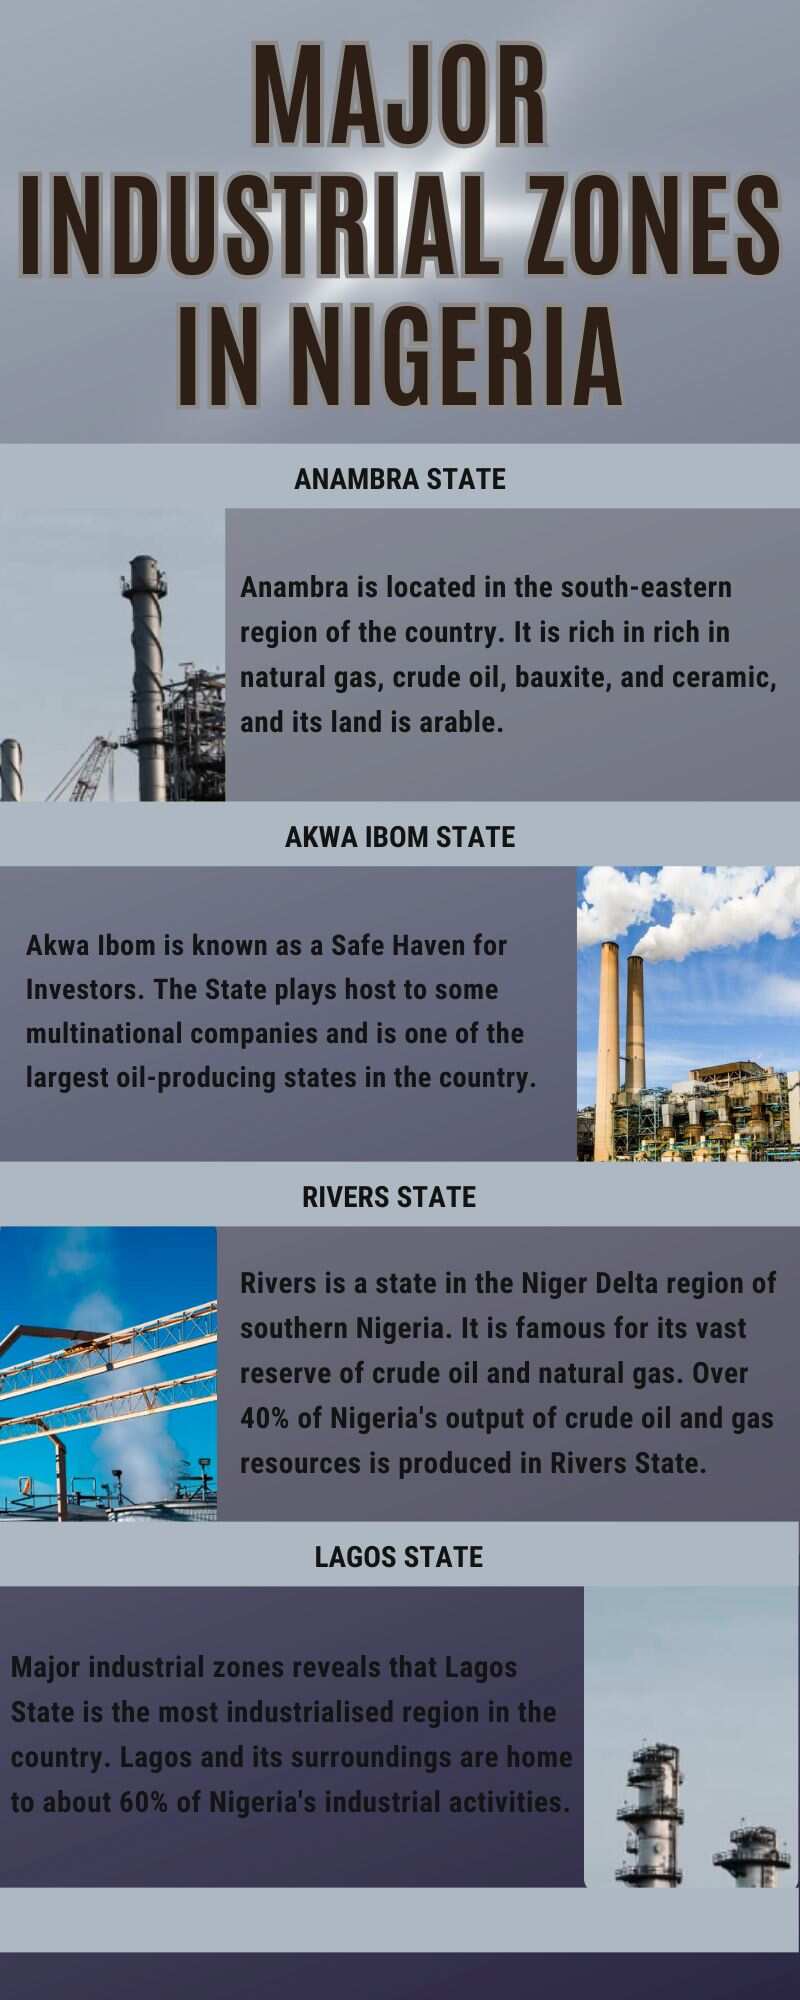 Major industrial zones in Nigeria